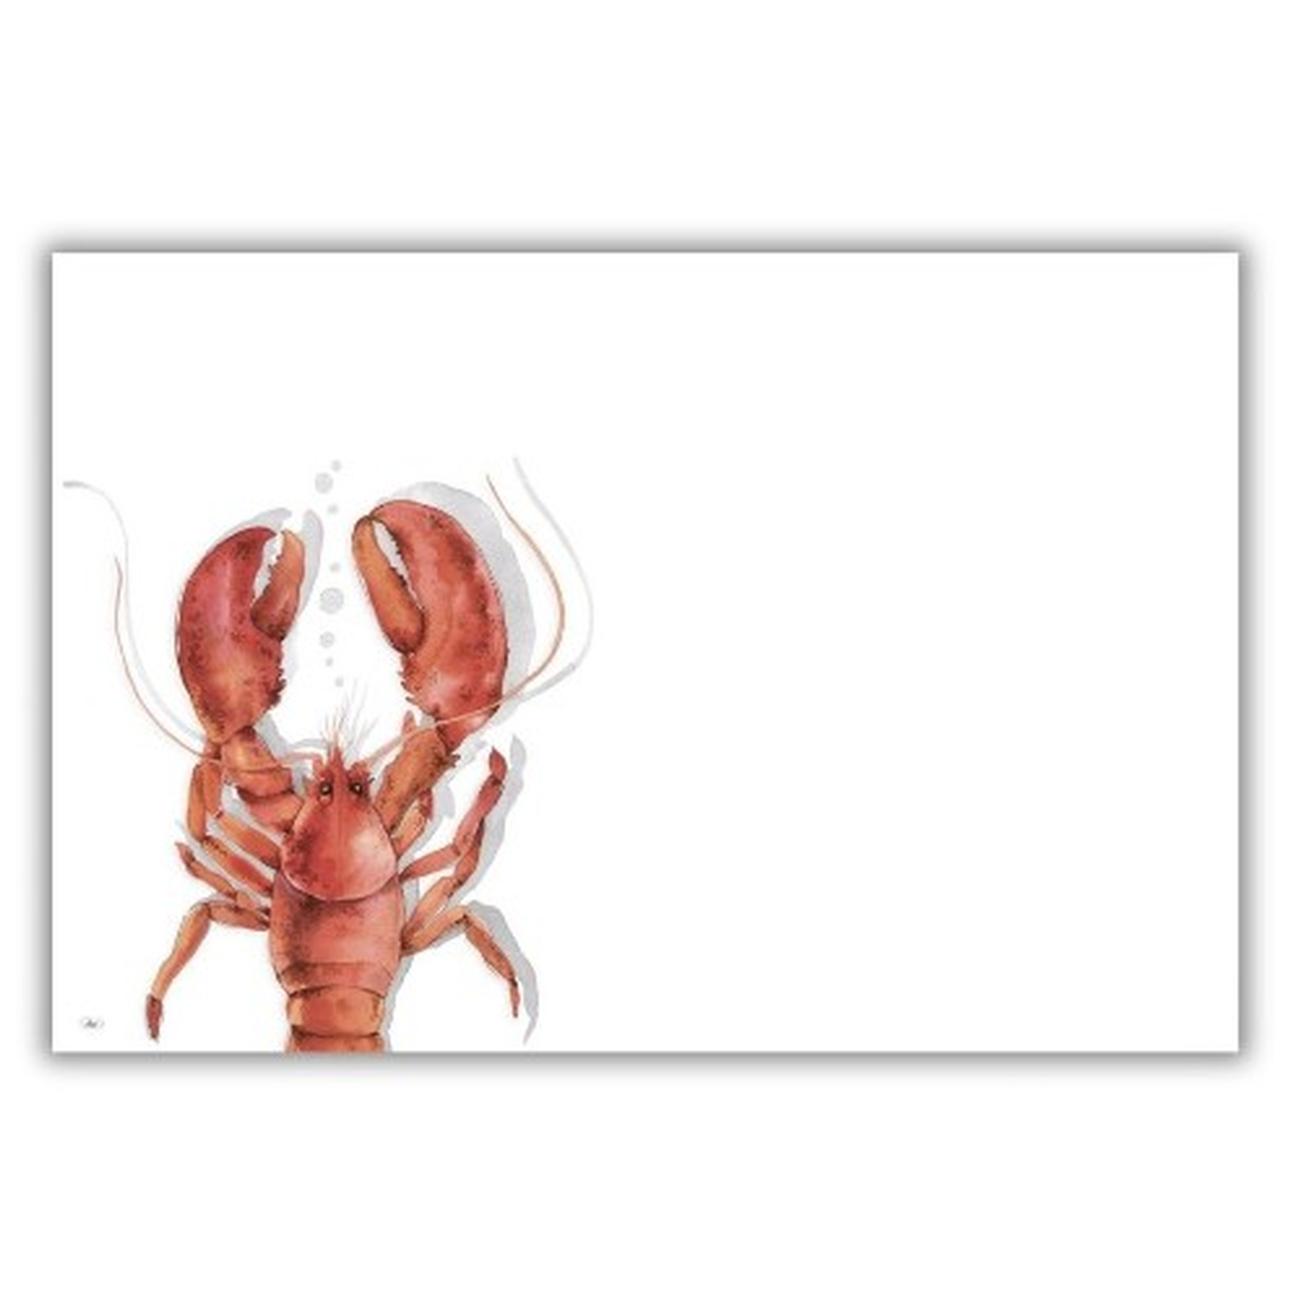 ihr-lobster-coral-placemat - IHR Lobster Coral Placemat 